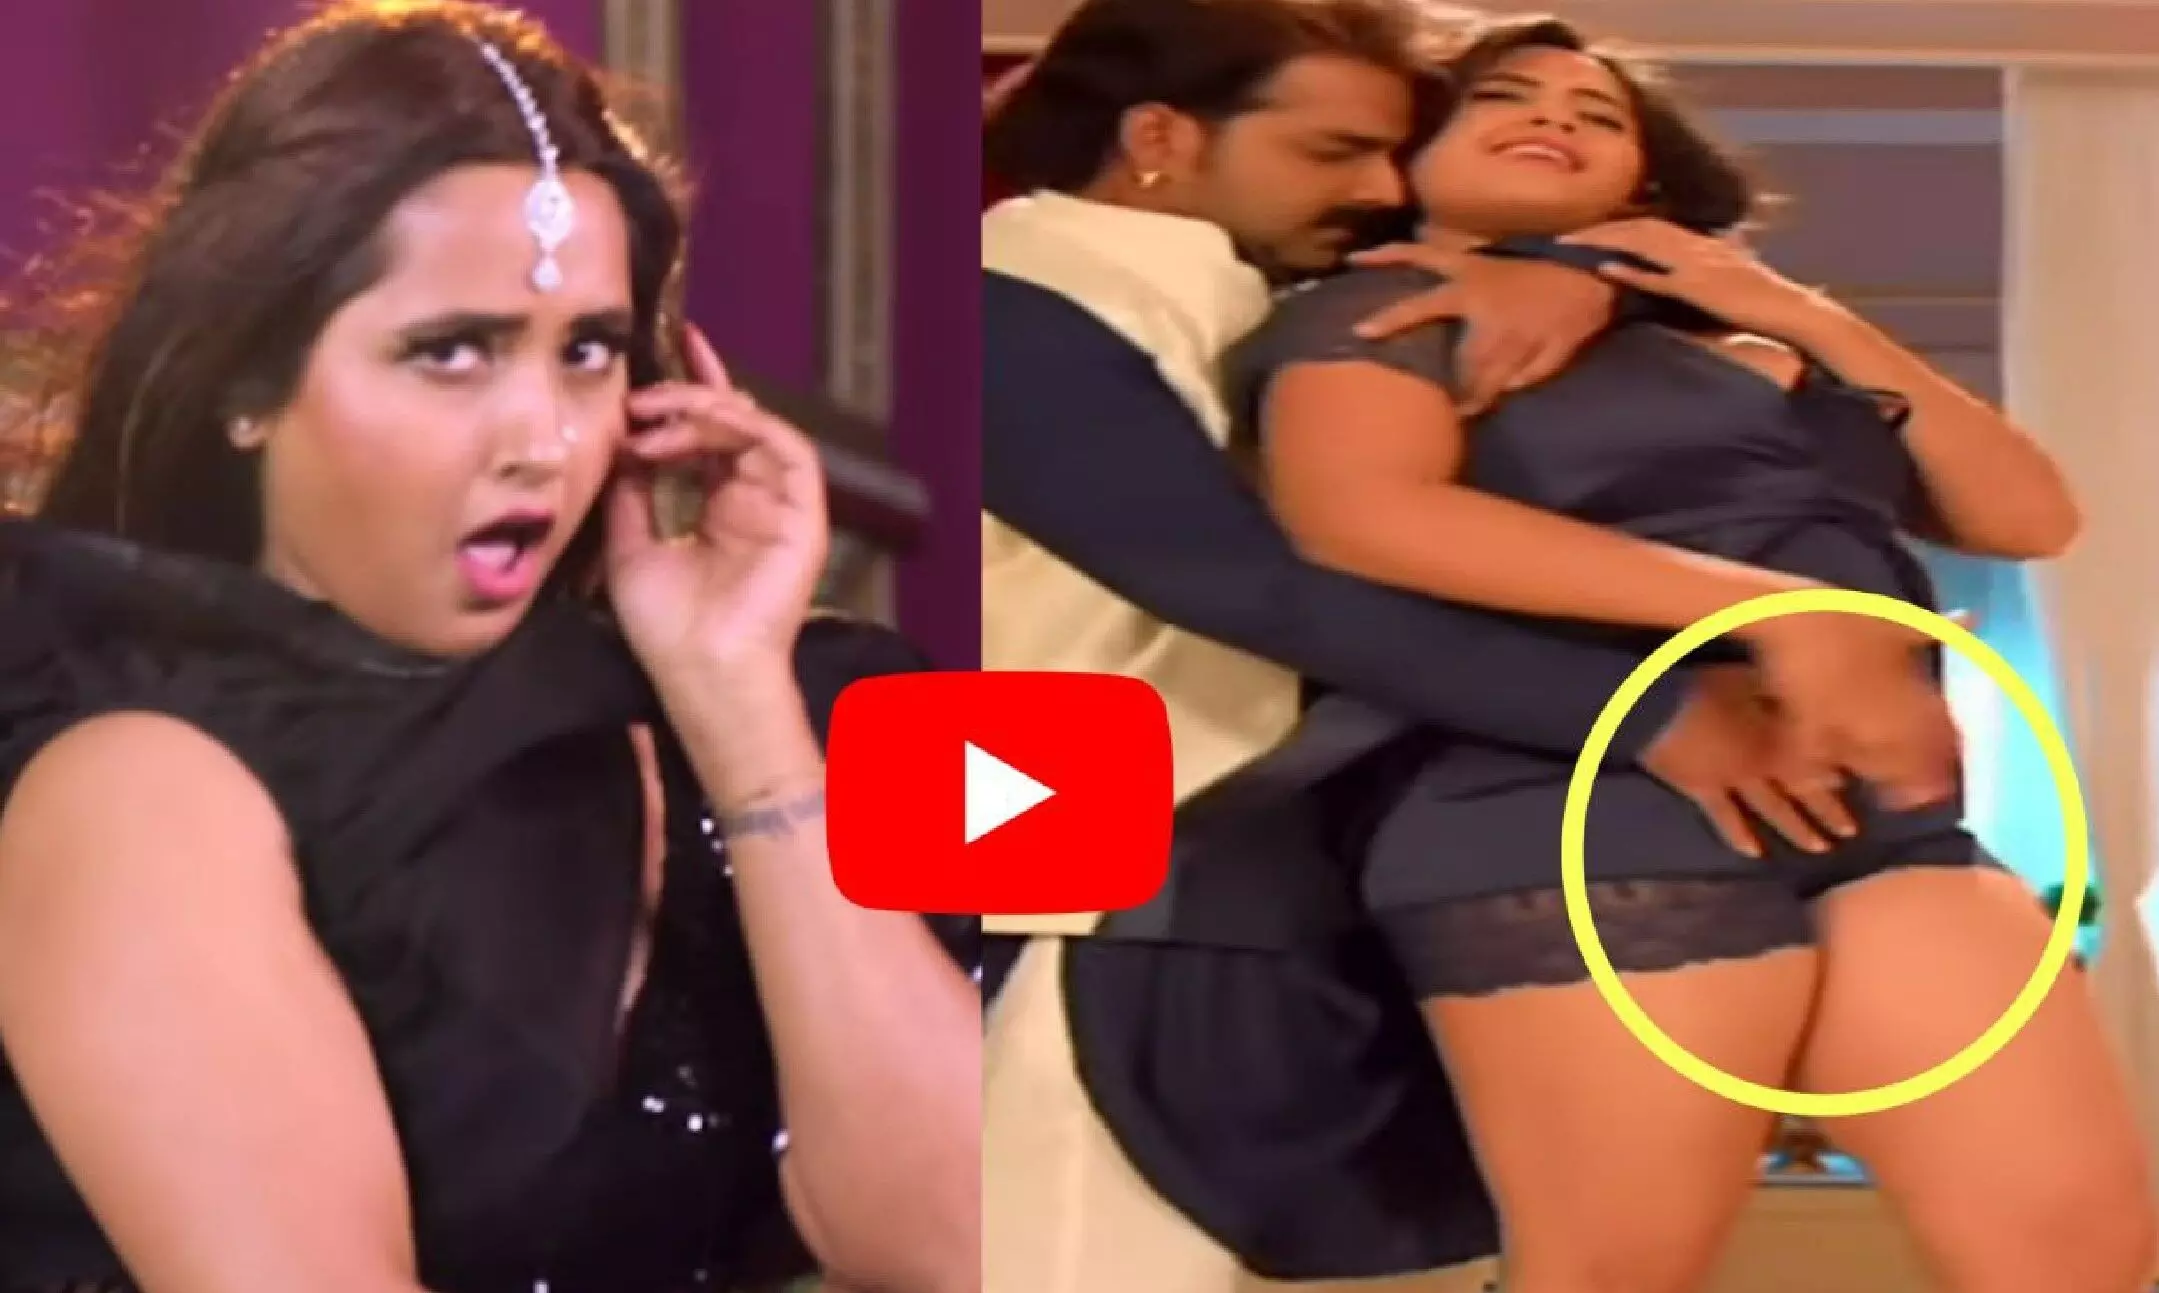 Kajal Raghwani Getting Fuck Porn - Kajal Raghwani HOT Video: à¤•à¤¾à¤œà¤² à¤°à¤¾à¤˜à¤µà¤¾à¤¨à¥€ à¤•à¤¾ à¤¹à¥‰à¤Ÿ à¤µà¥€à¤¡à¤¿à¤¯à¥‹ à¤¦à¥‡à¤– à¤¦à¥€à¤µà¤¾à¤¨à¥‡ à¤¹à¥‹ à¤—à¤ à¤«à¥ˆà¤¨à¥à¤¸  | Kajal Raghwani HOT Video: Fans went crazy after watching Kajal Raghwani's  hot video